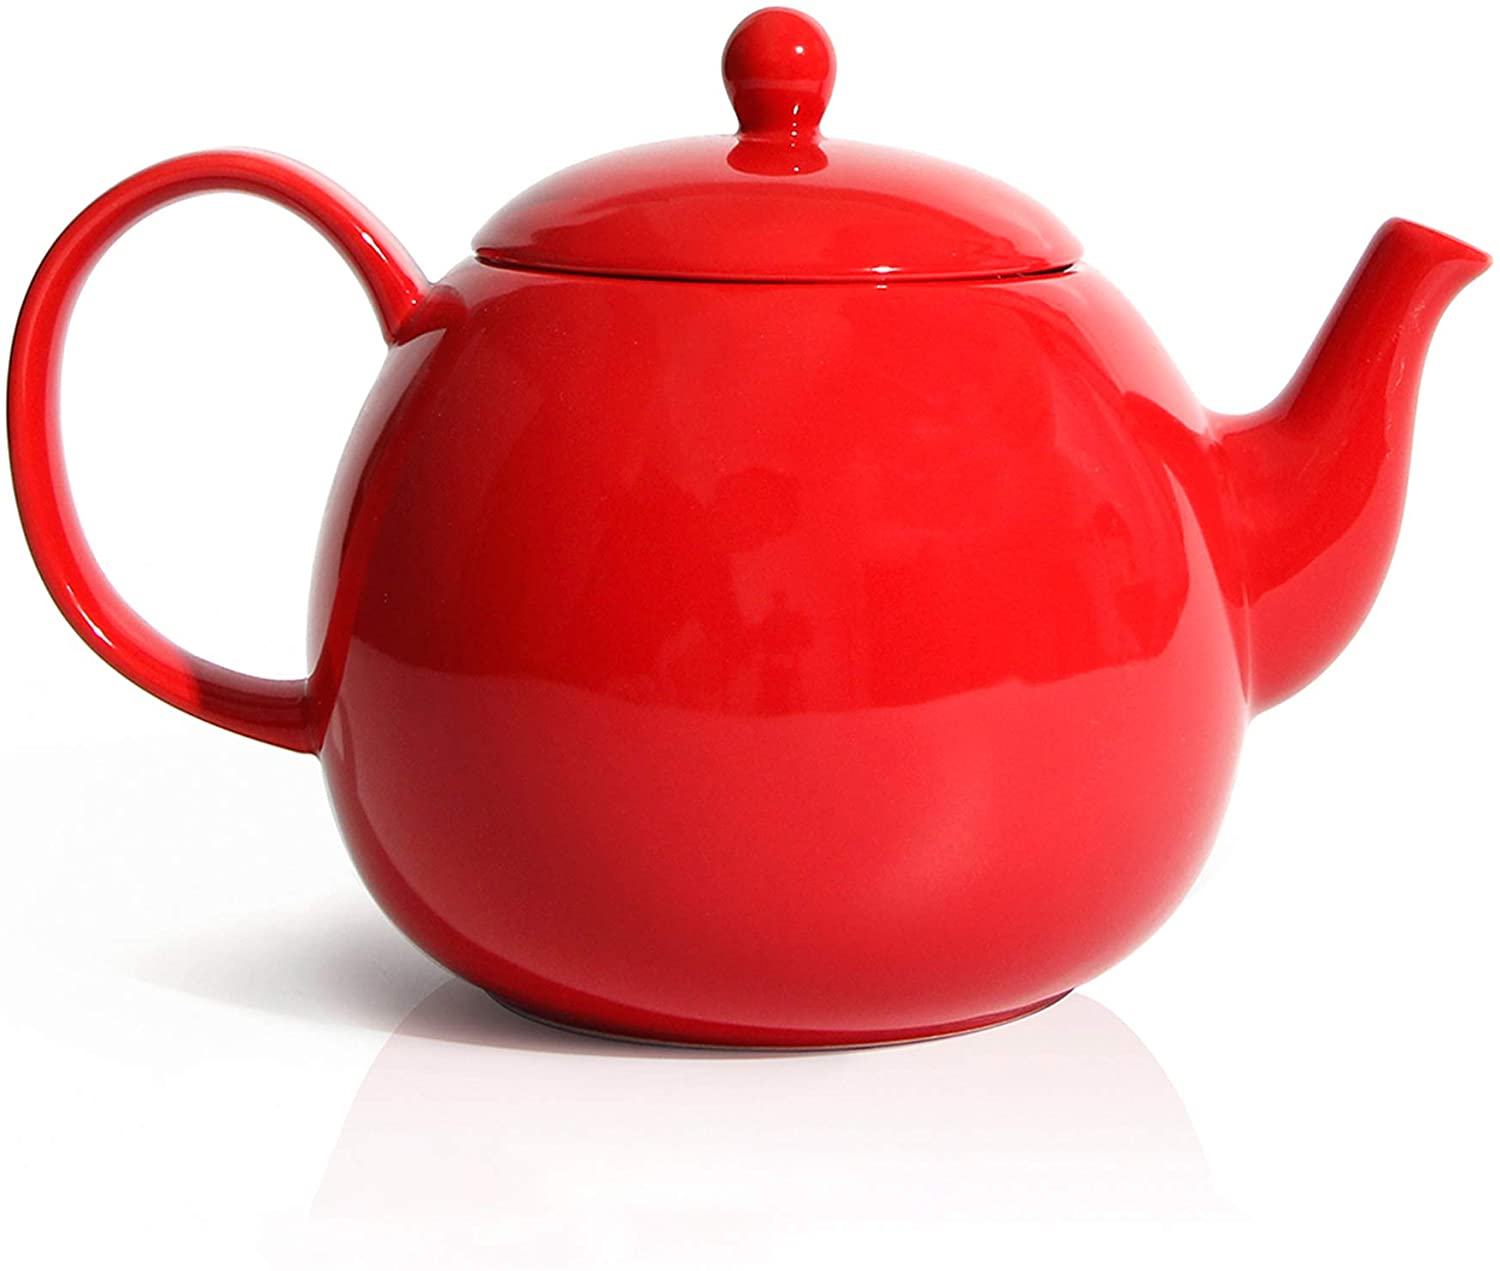 Sweese Lip-Catch Lid Porcelain Teapot